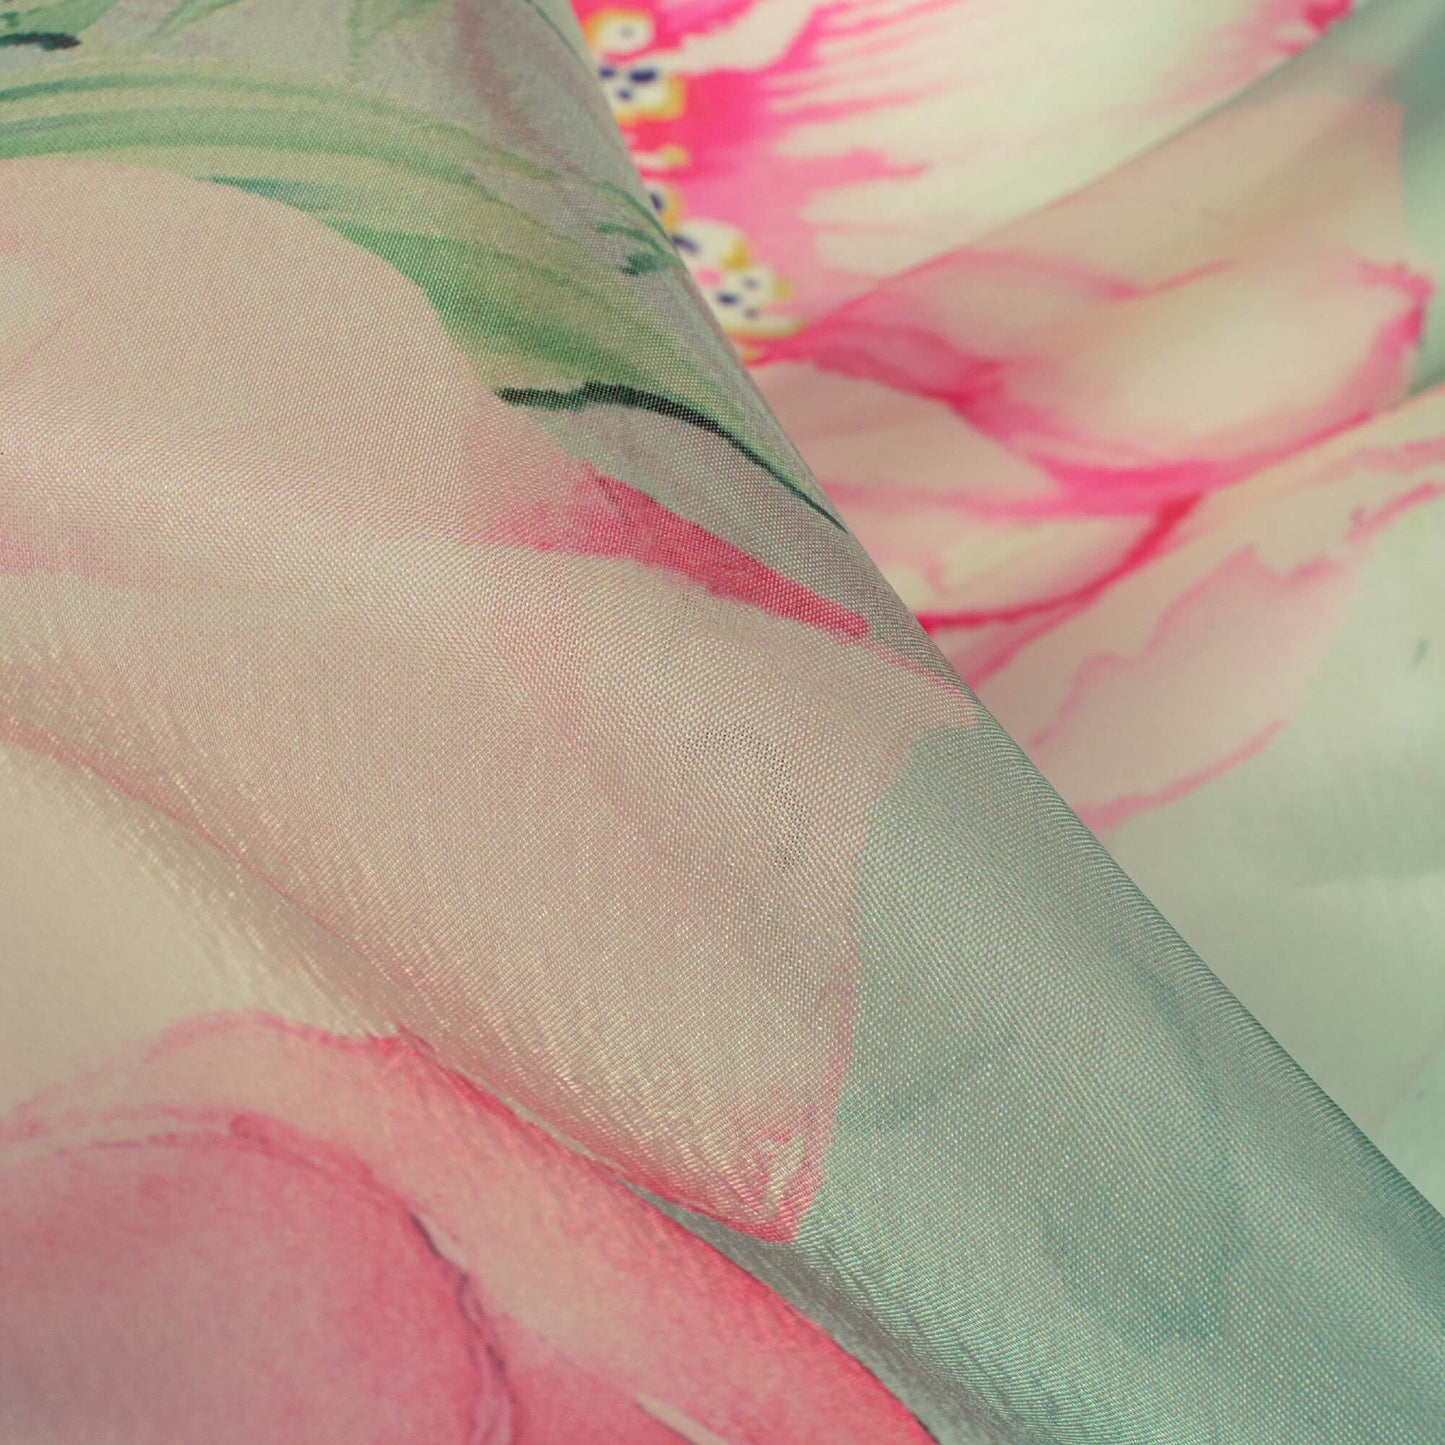 Pistachio Green And Taffy Pink Floral Pattern Digital Print Organza Satin Fabric